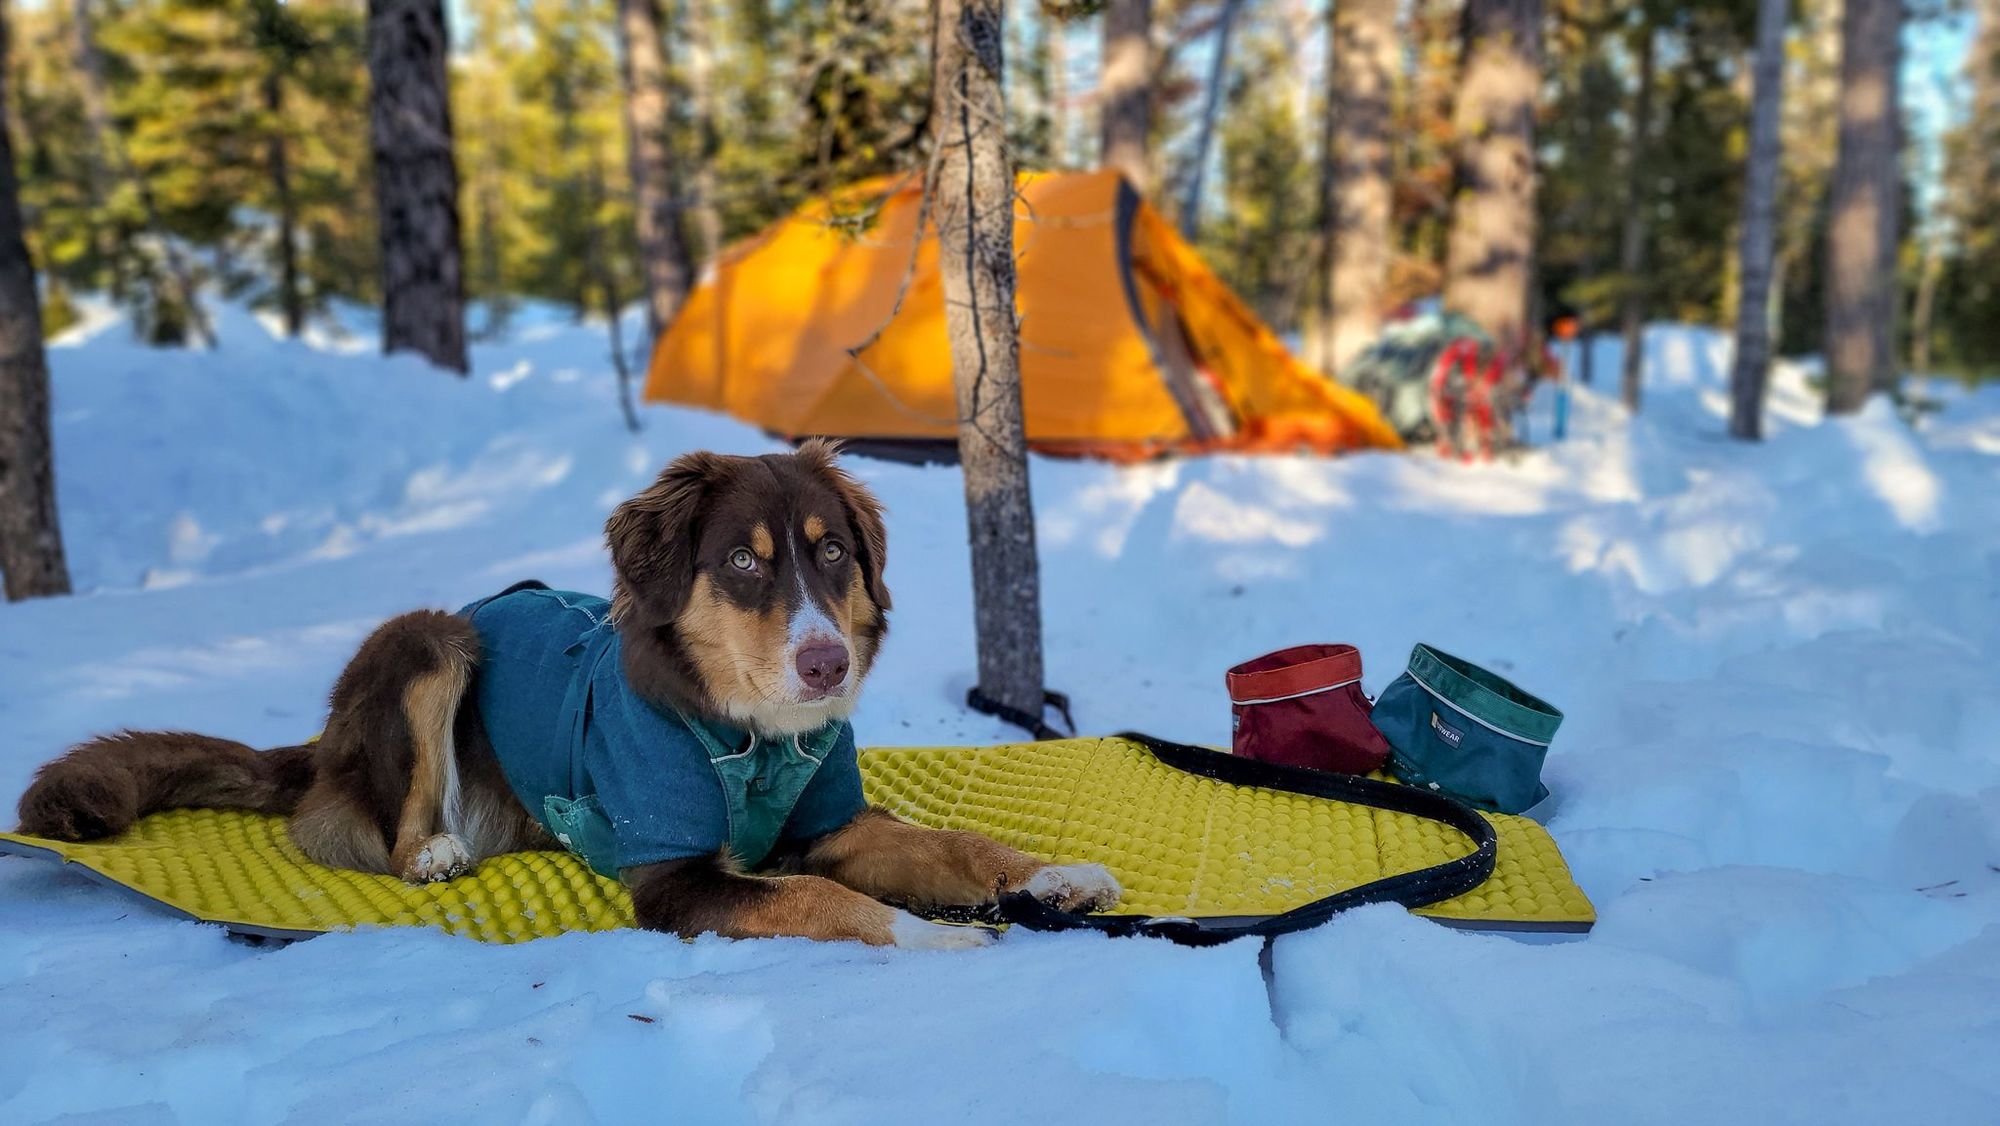 Winter camping and dog